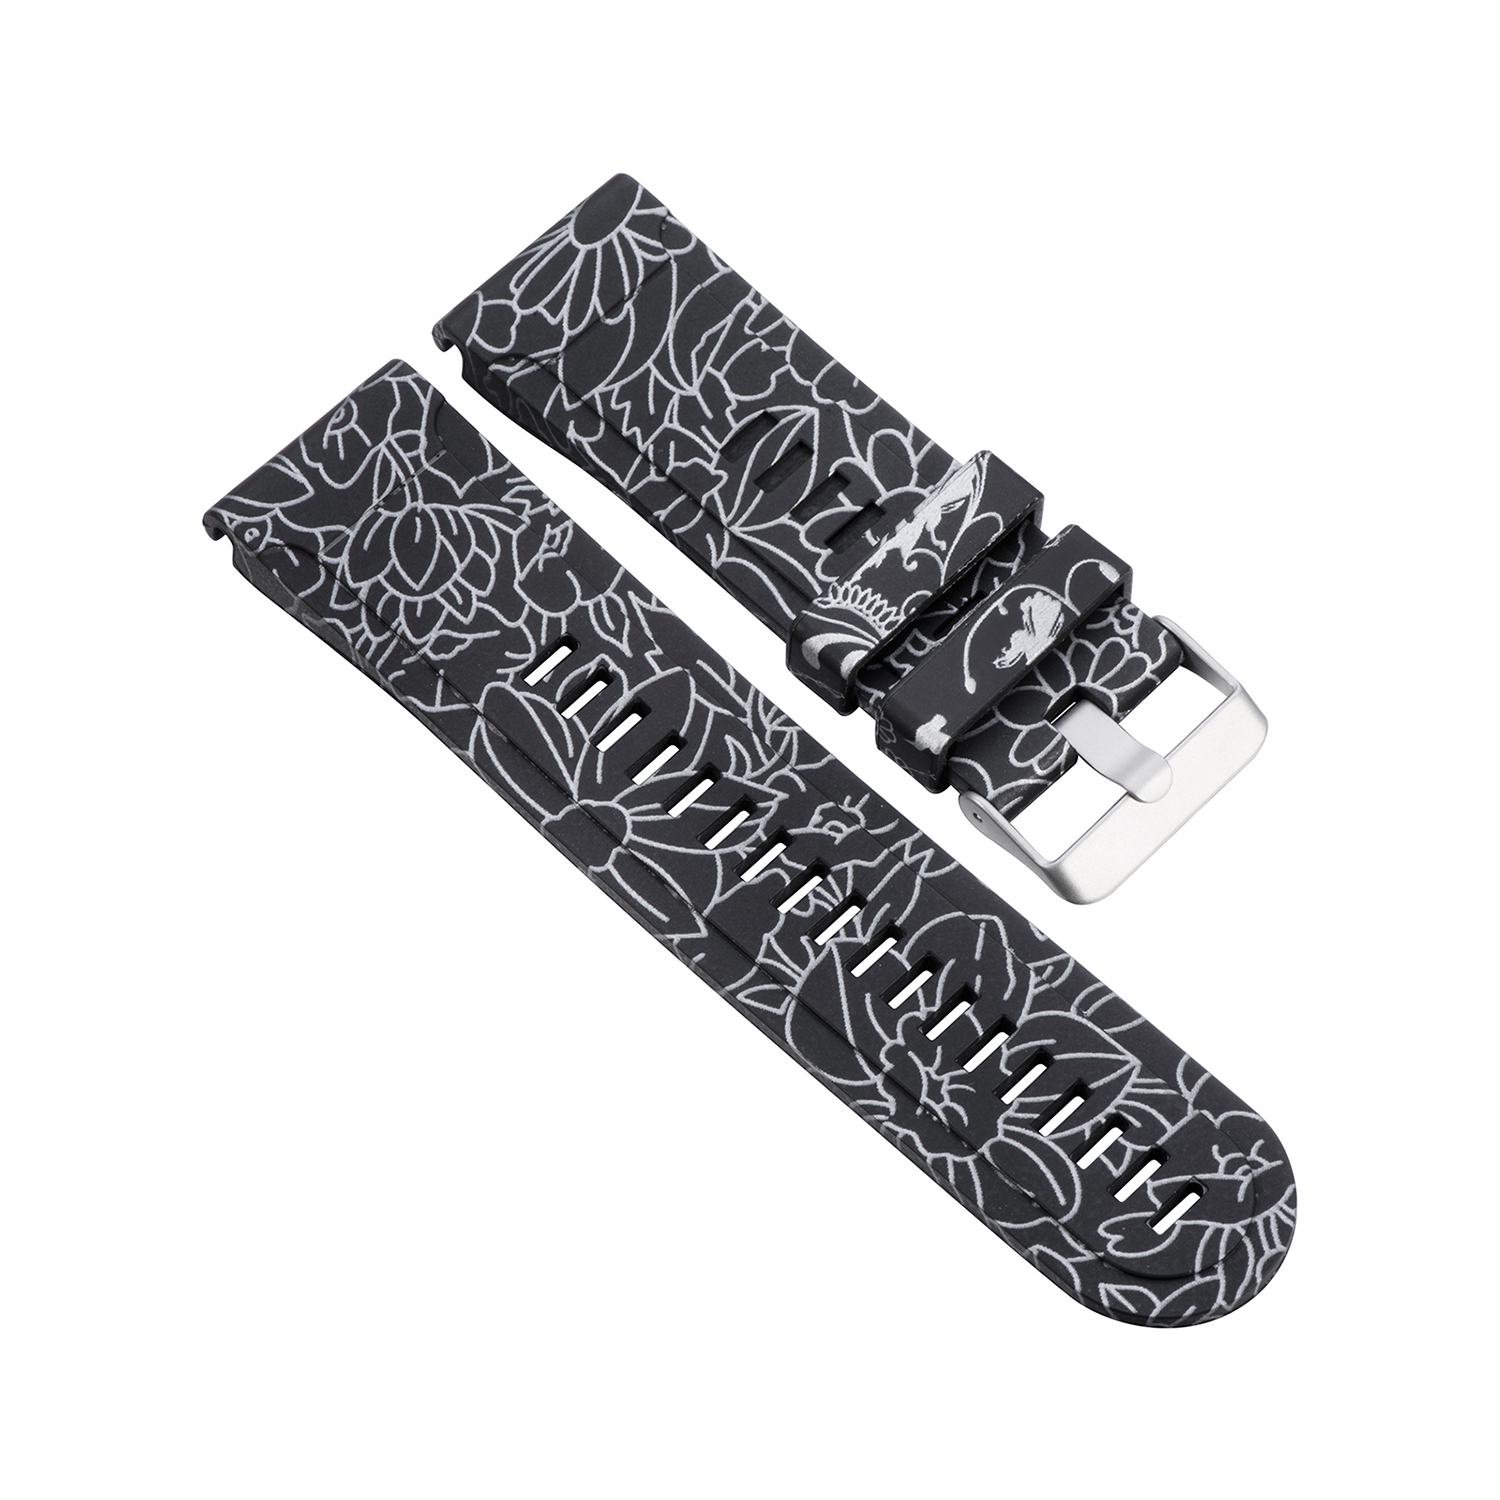 StrapsCo QuickFit 22 Silicone Rubber Watch Band Strap for Garmin Fenix 5 & Forerunner 935 & Instinct - Chrome Flowers